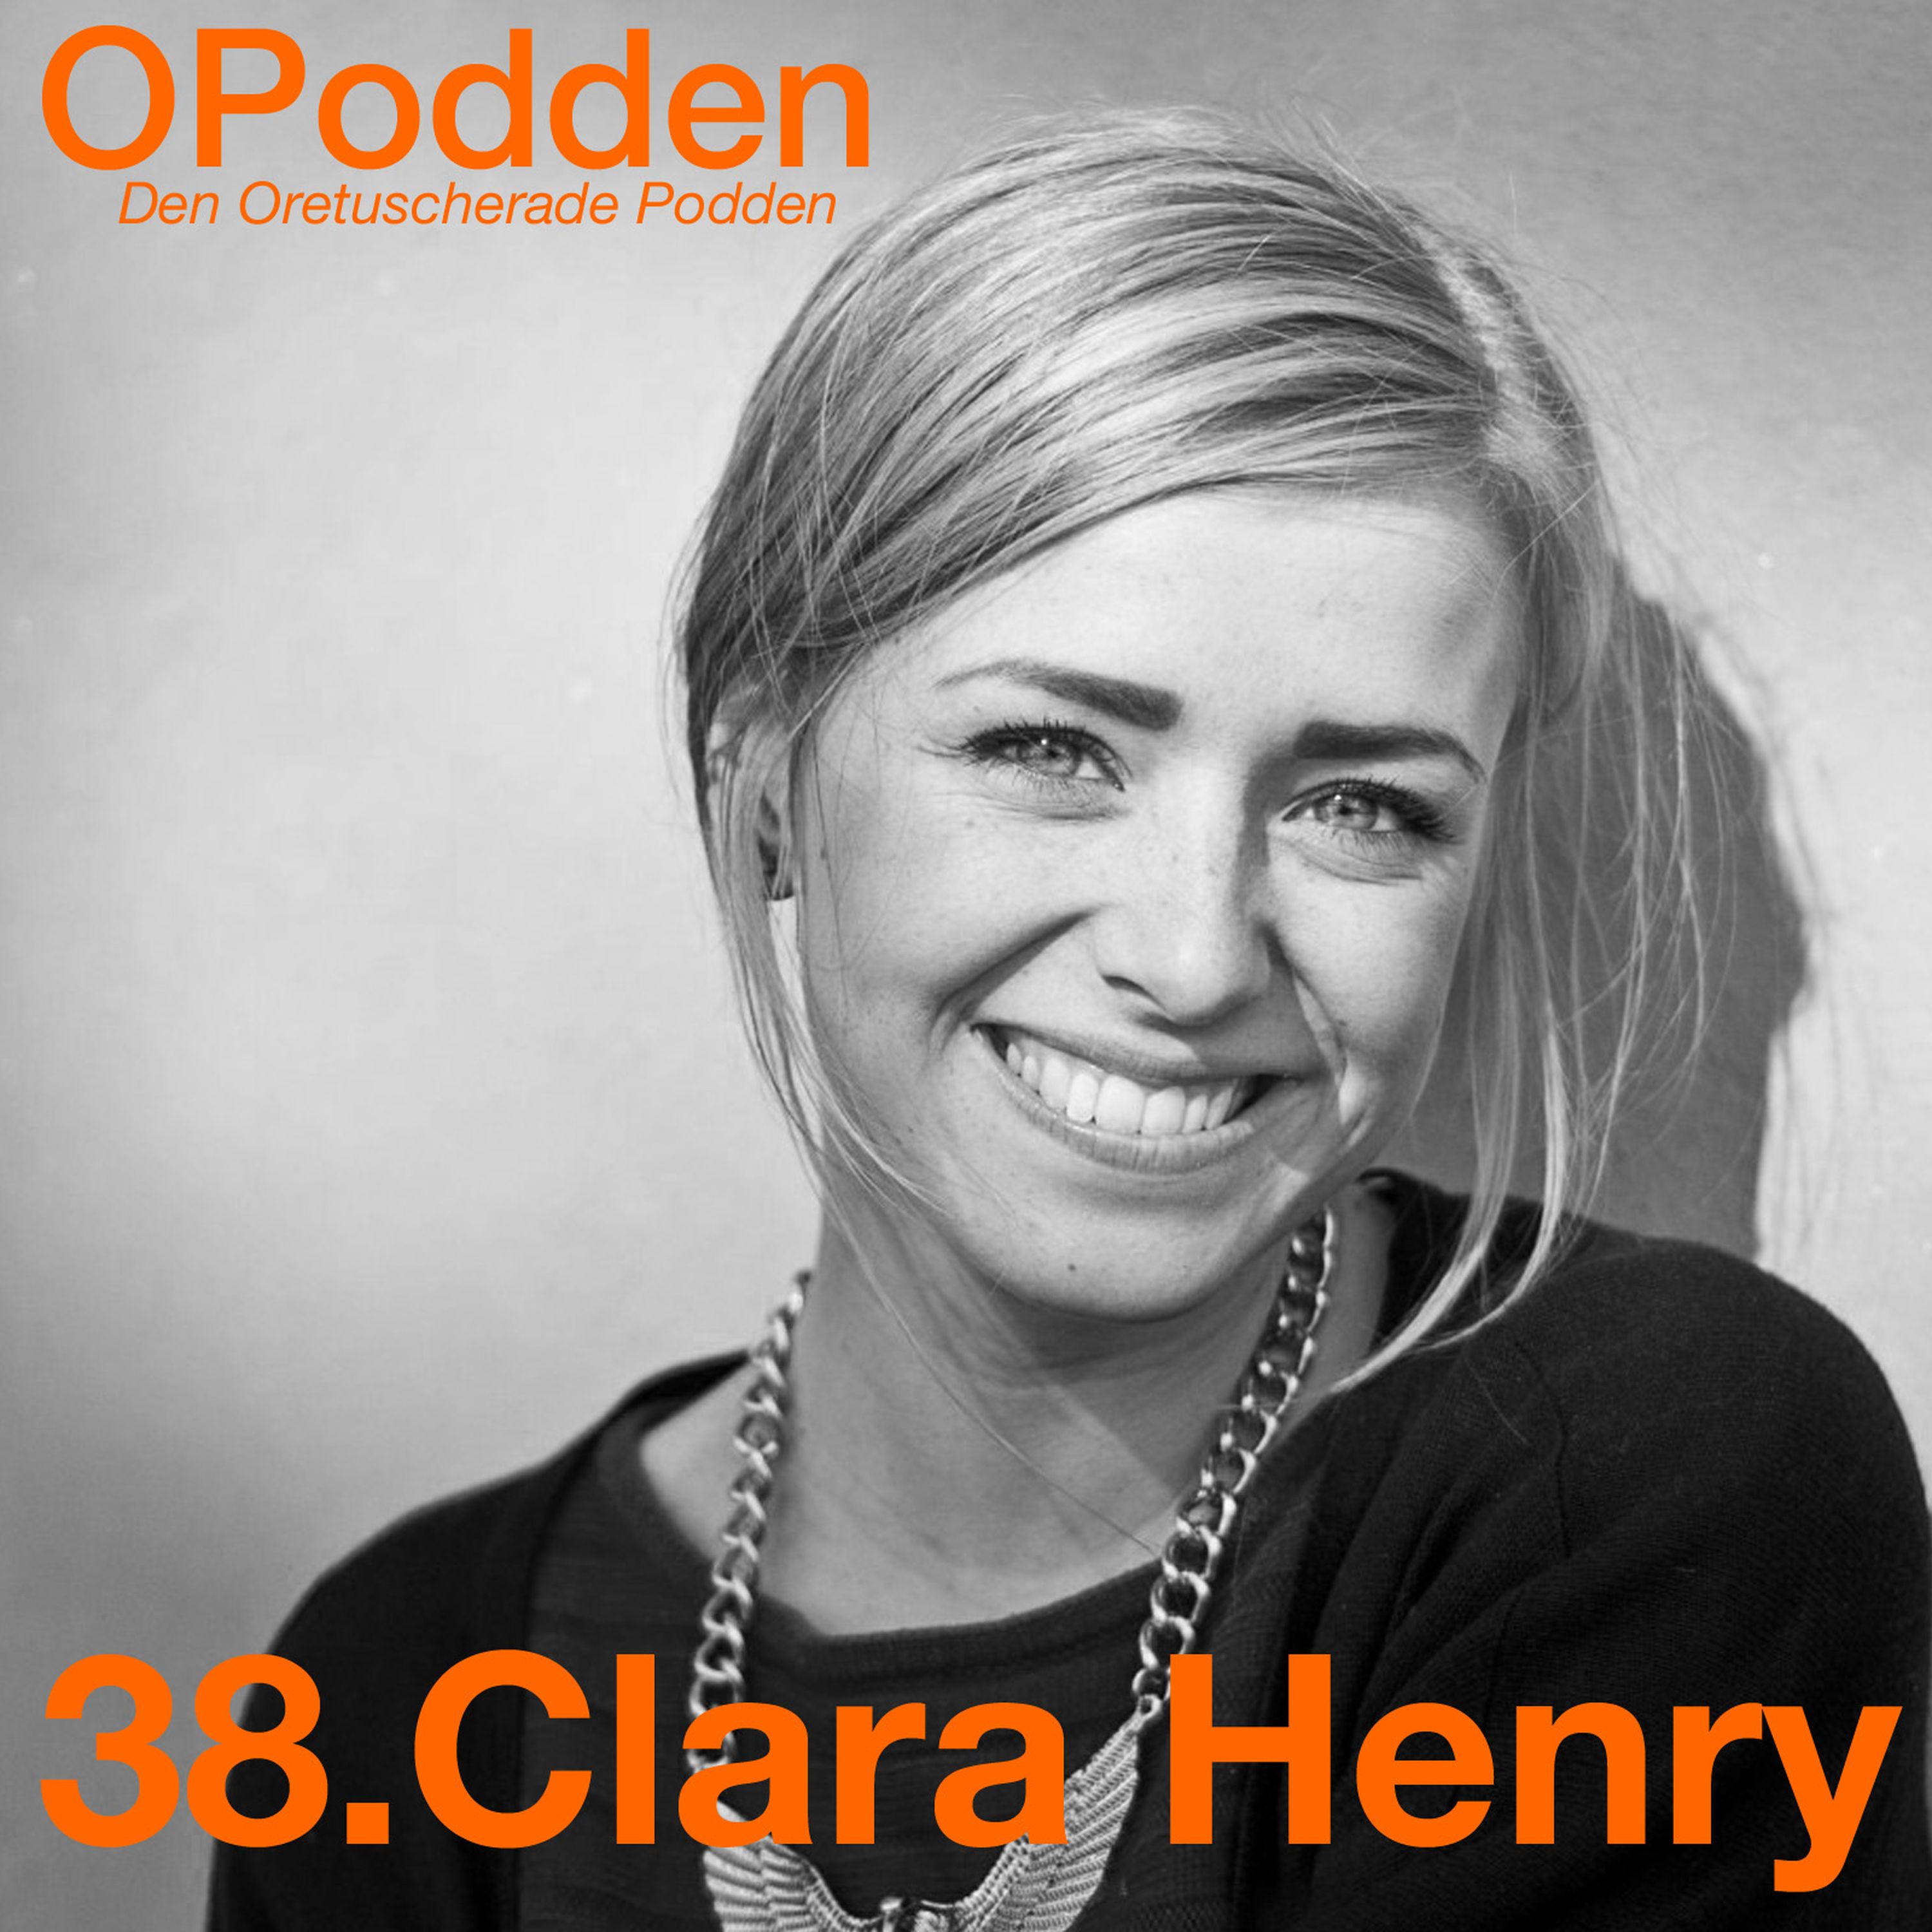 38.Clara Henry